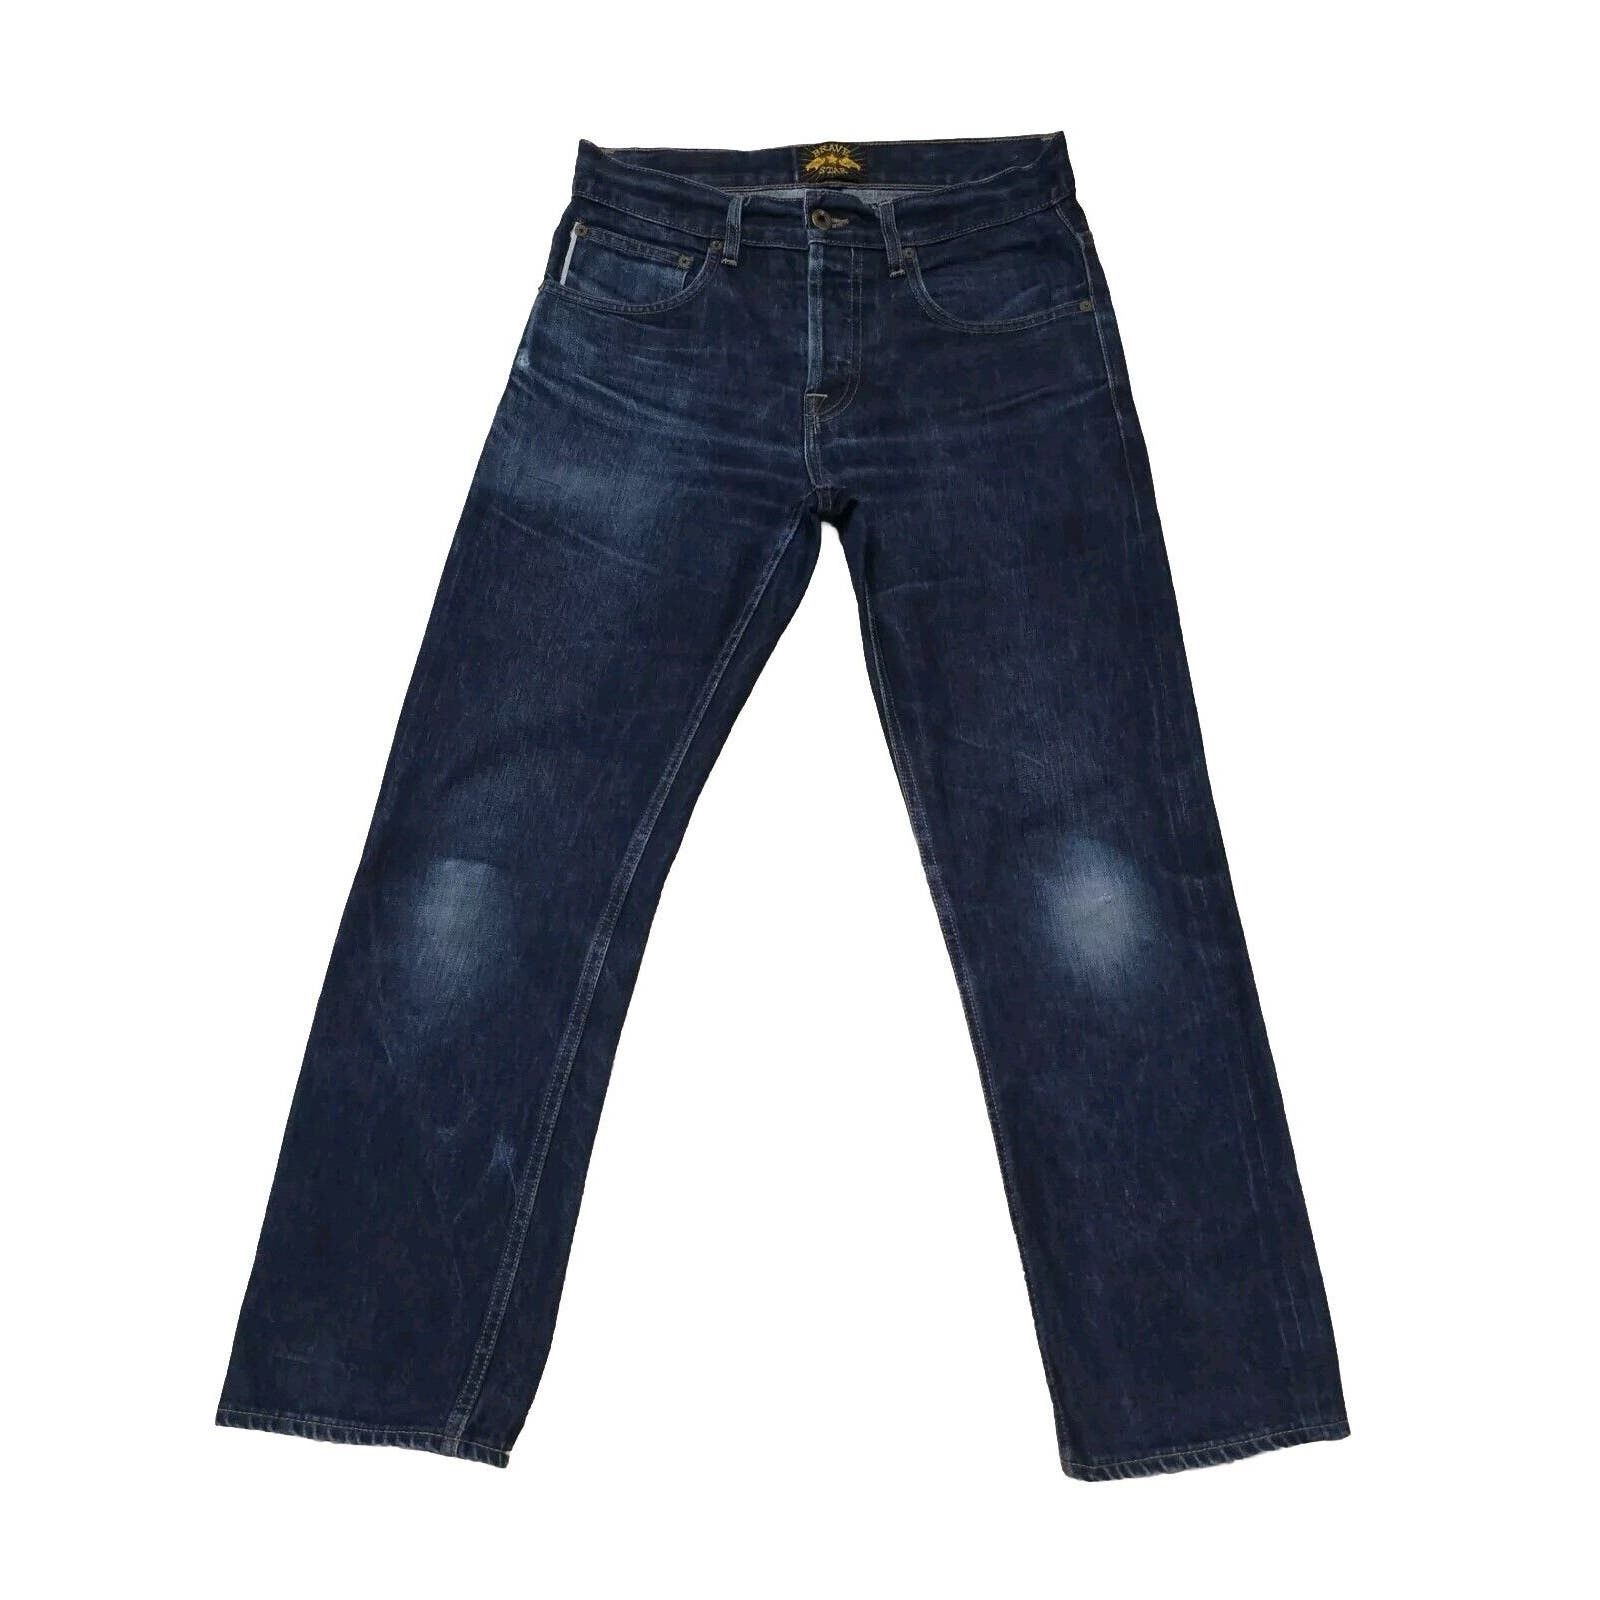 Brave Star Selvage Brave Star Selvedge Jeans Heavy Denim Made in USA  30×28.5